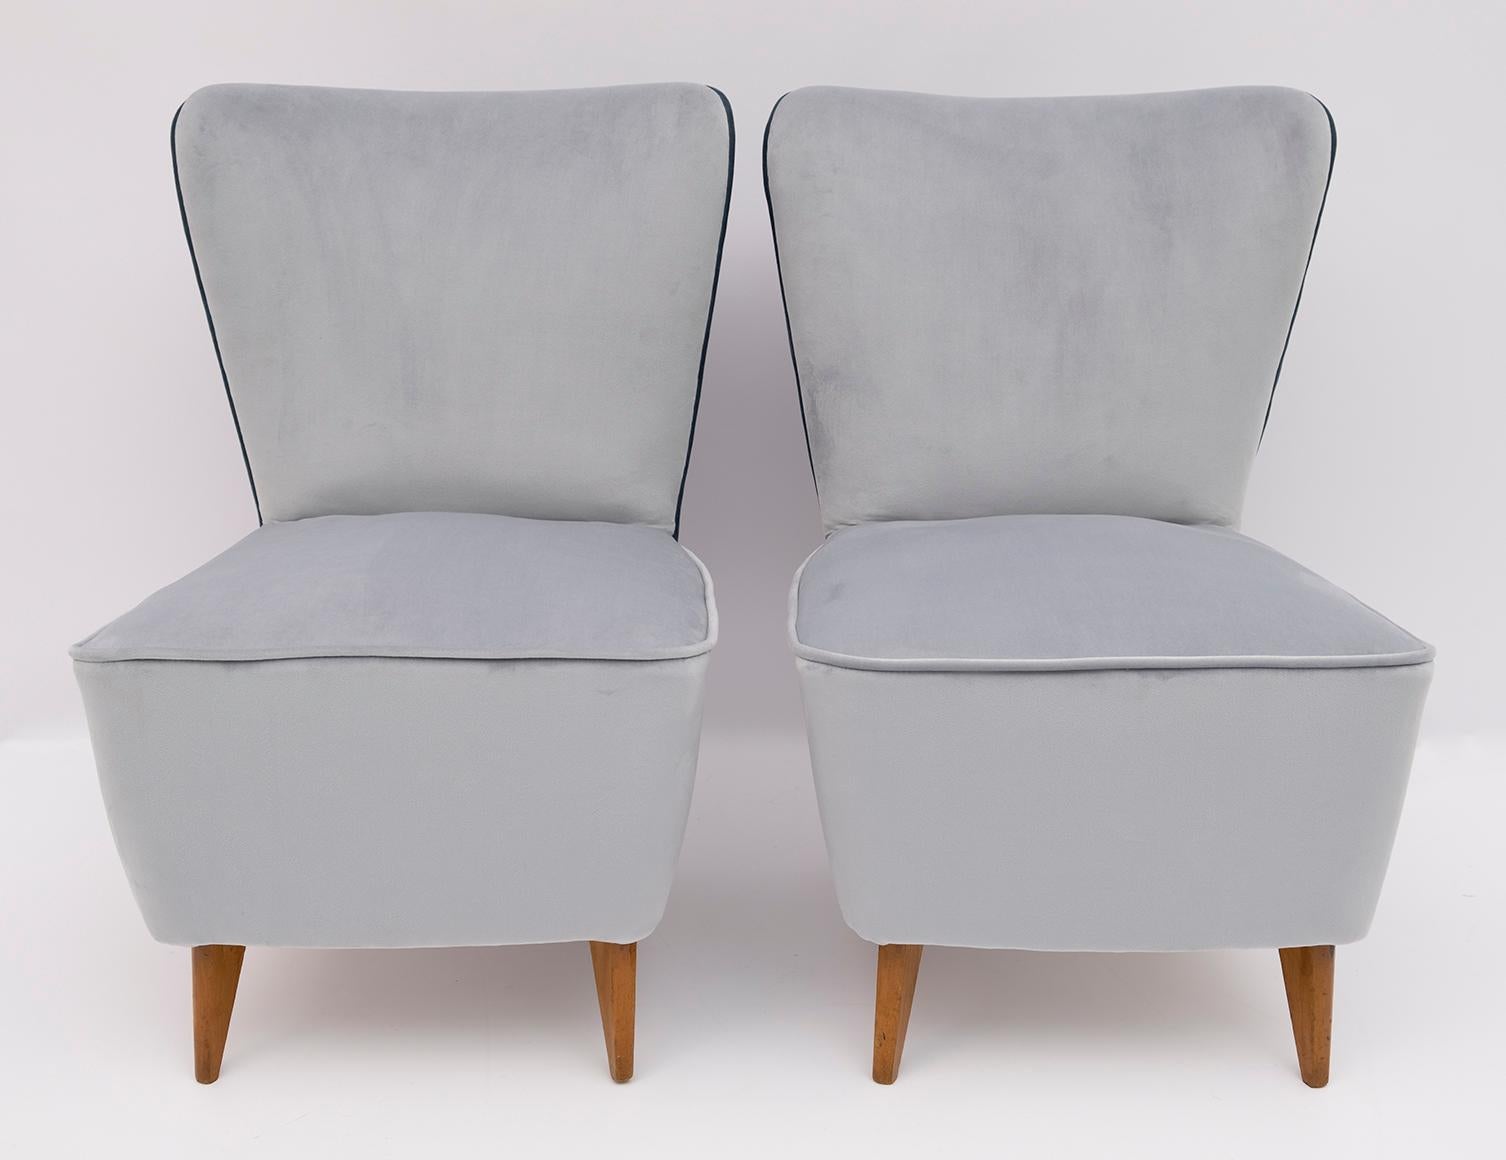 Velvet Guglielmo Veronesi Mid-Century Modern Italian Small Armchairs for I.S.A., Pair For Sale